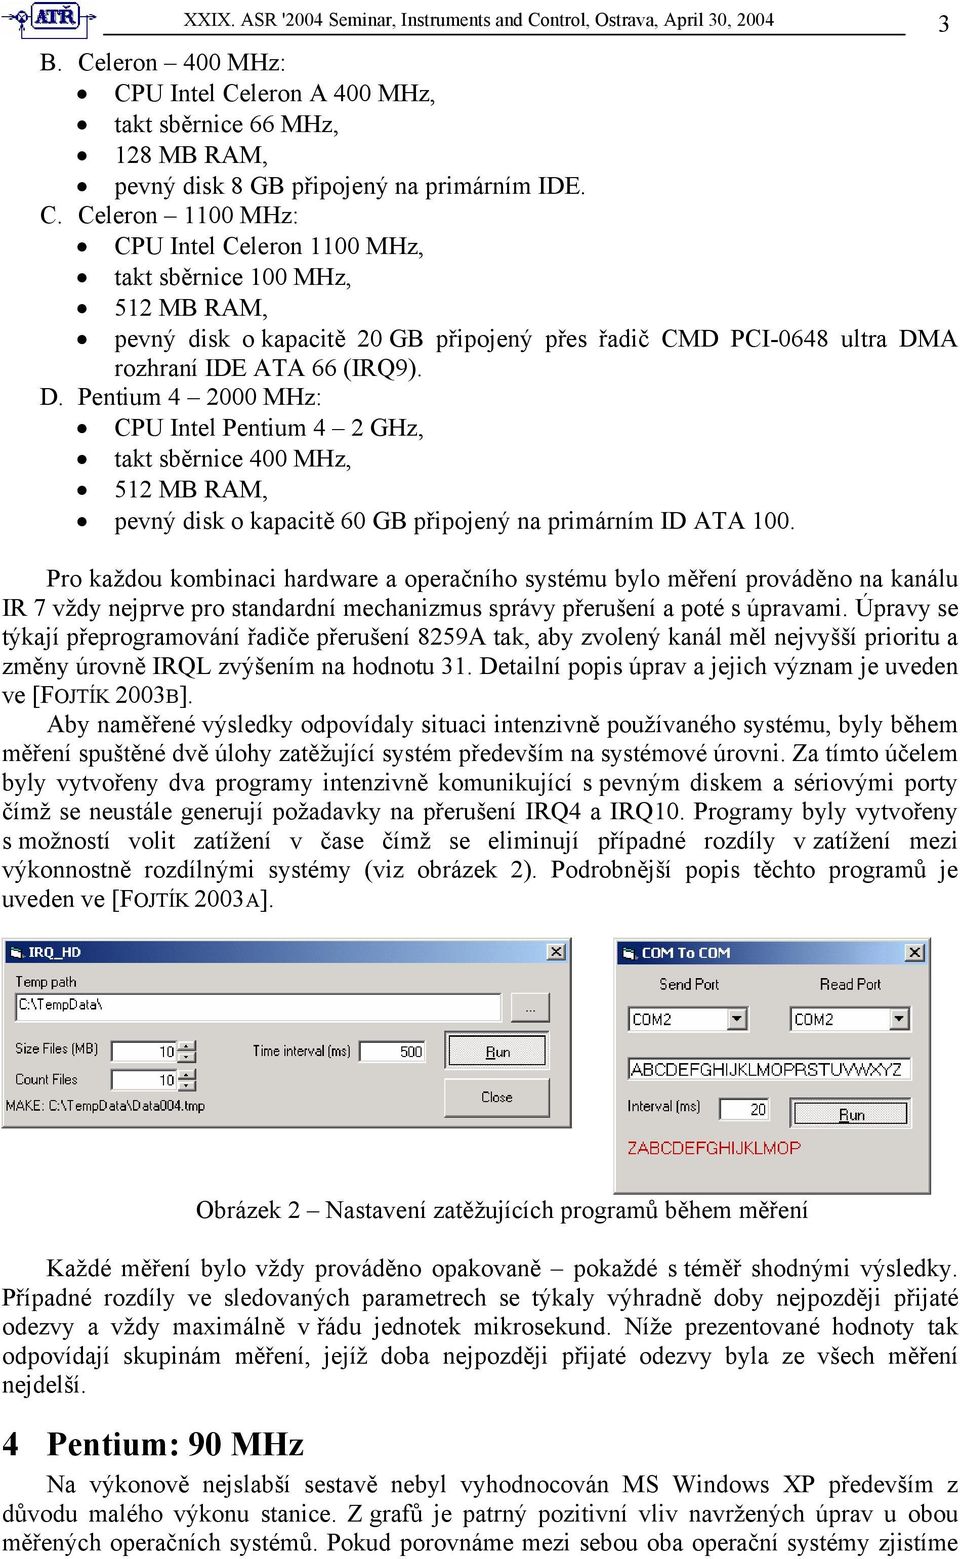 D. Pentium 4 2000 MHz: CPU Intel Pentium 4 2 GHz, takt sběrnice 400 MHz, 52 MB RAM, pevný disk o kapacitě 60 GB připojený na primárním ID ATA.